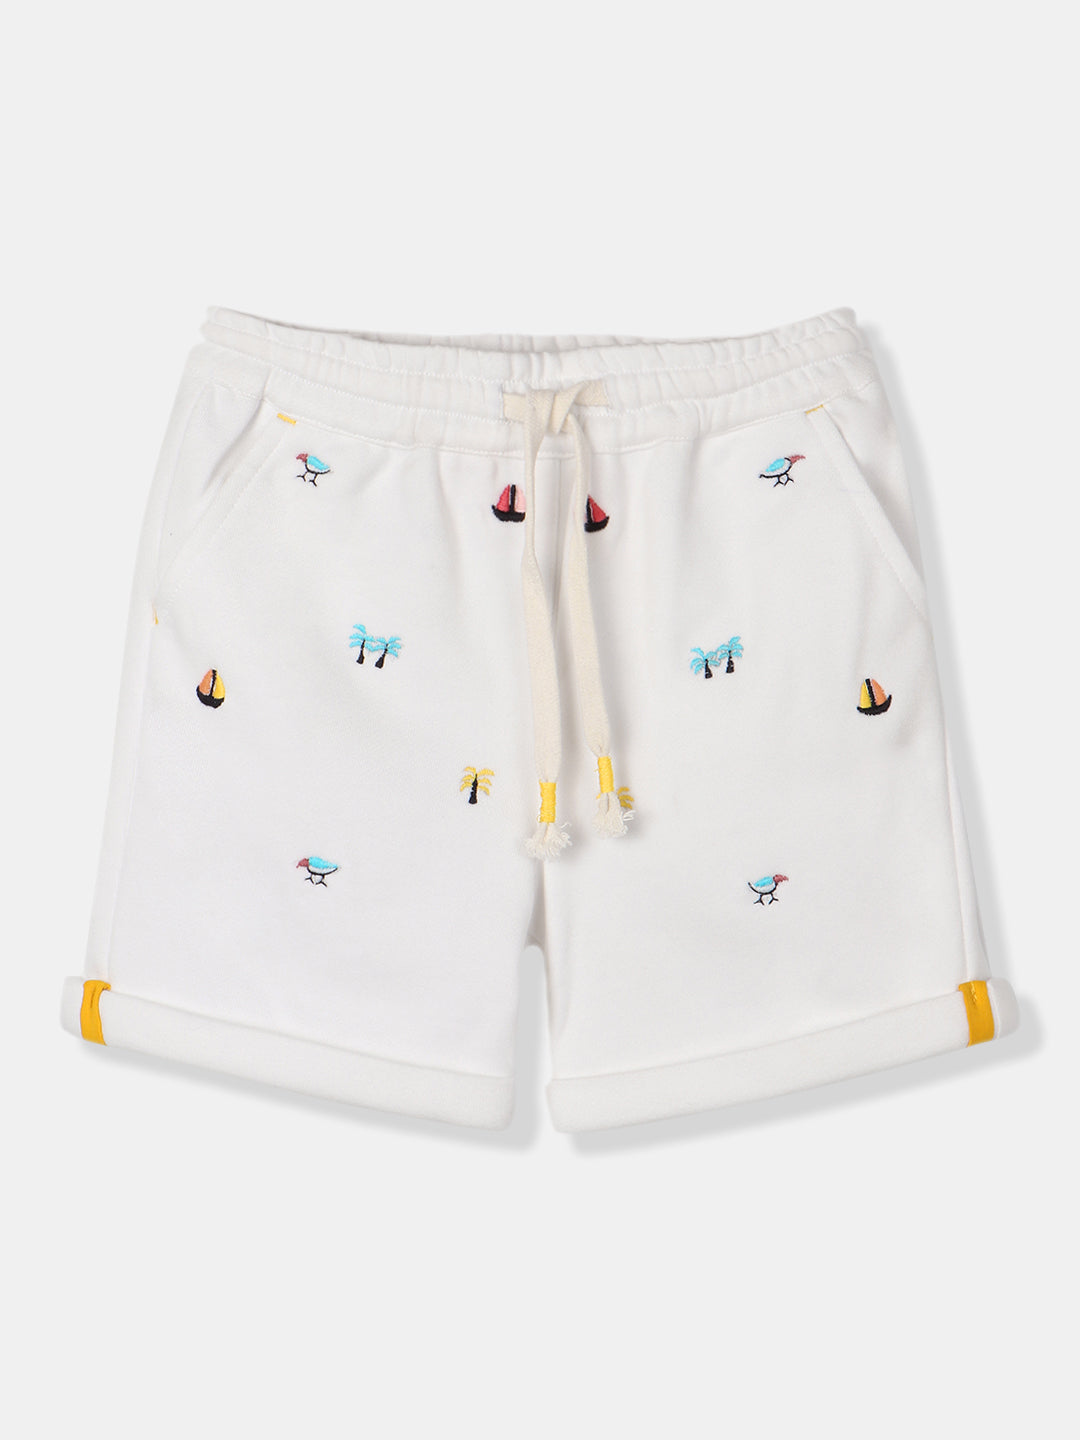 Nautinati Boys Conversational Embroidered Pure Cotton Shorts